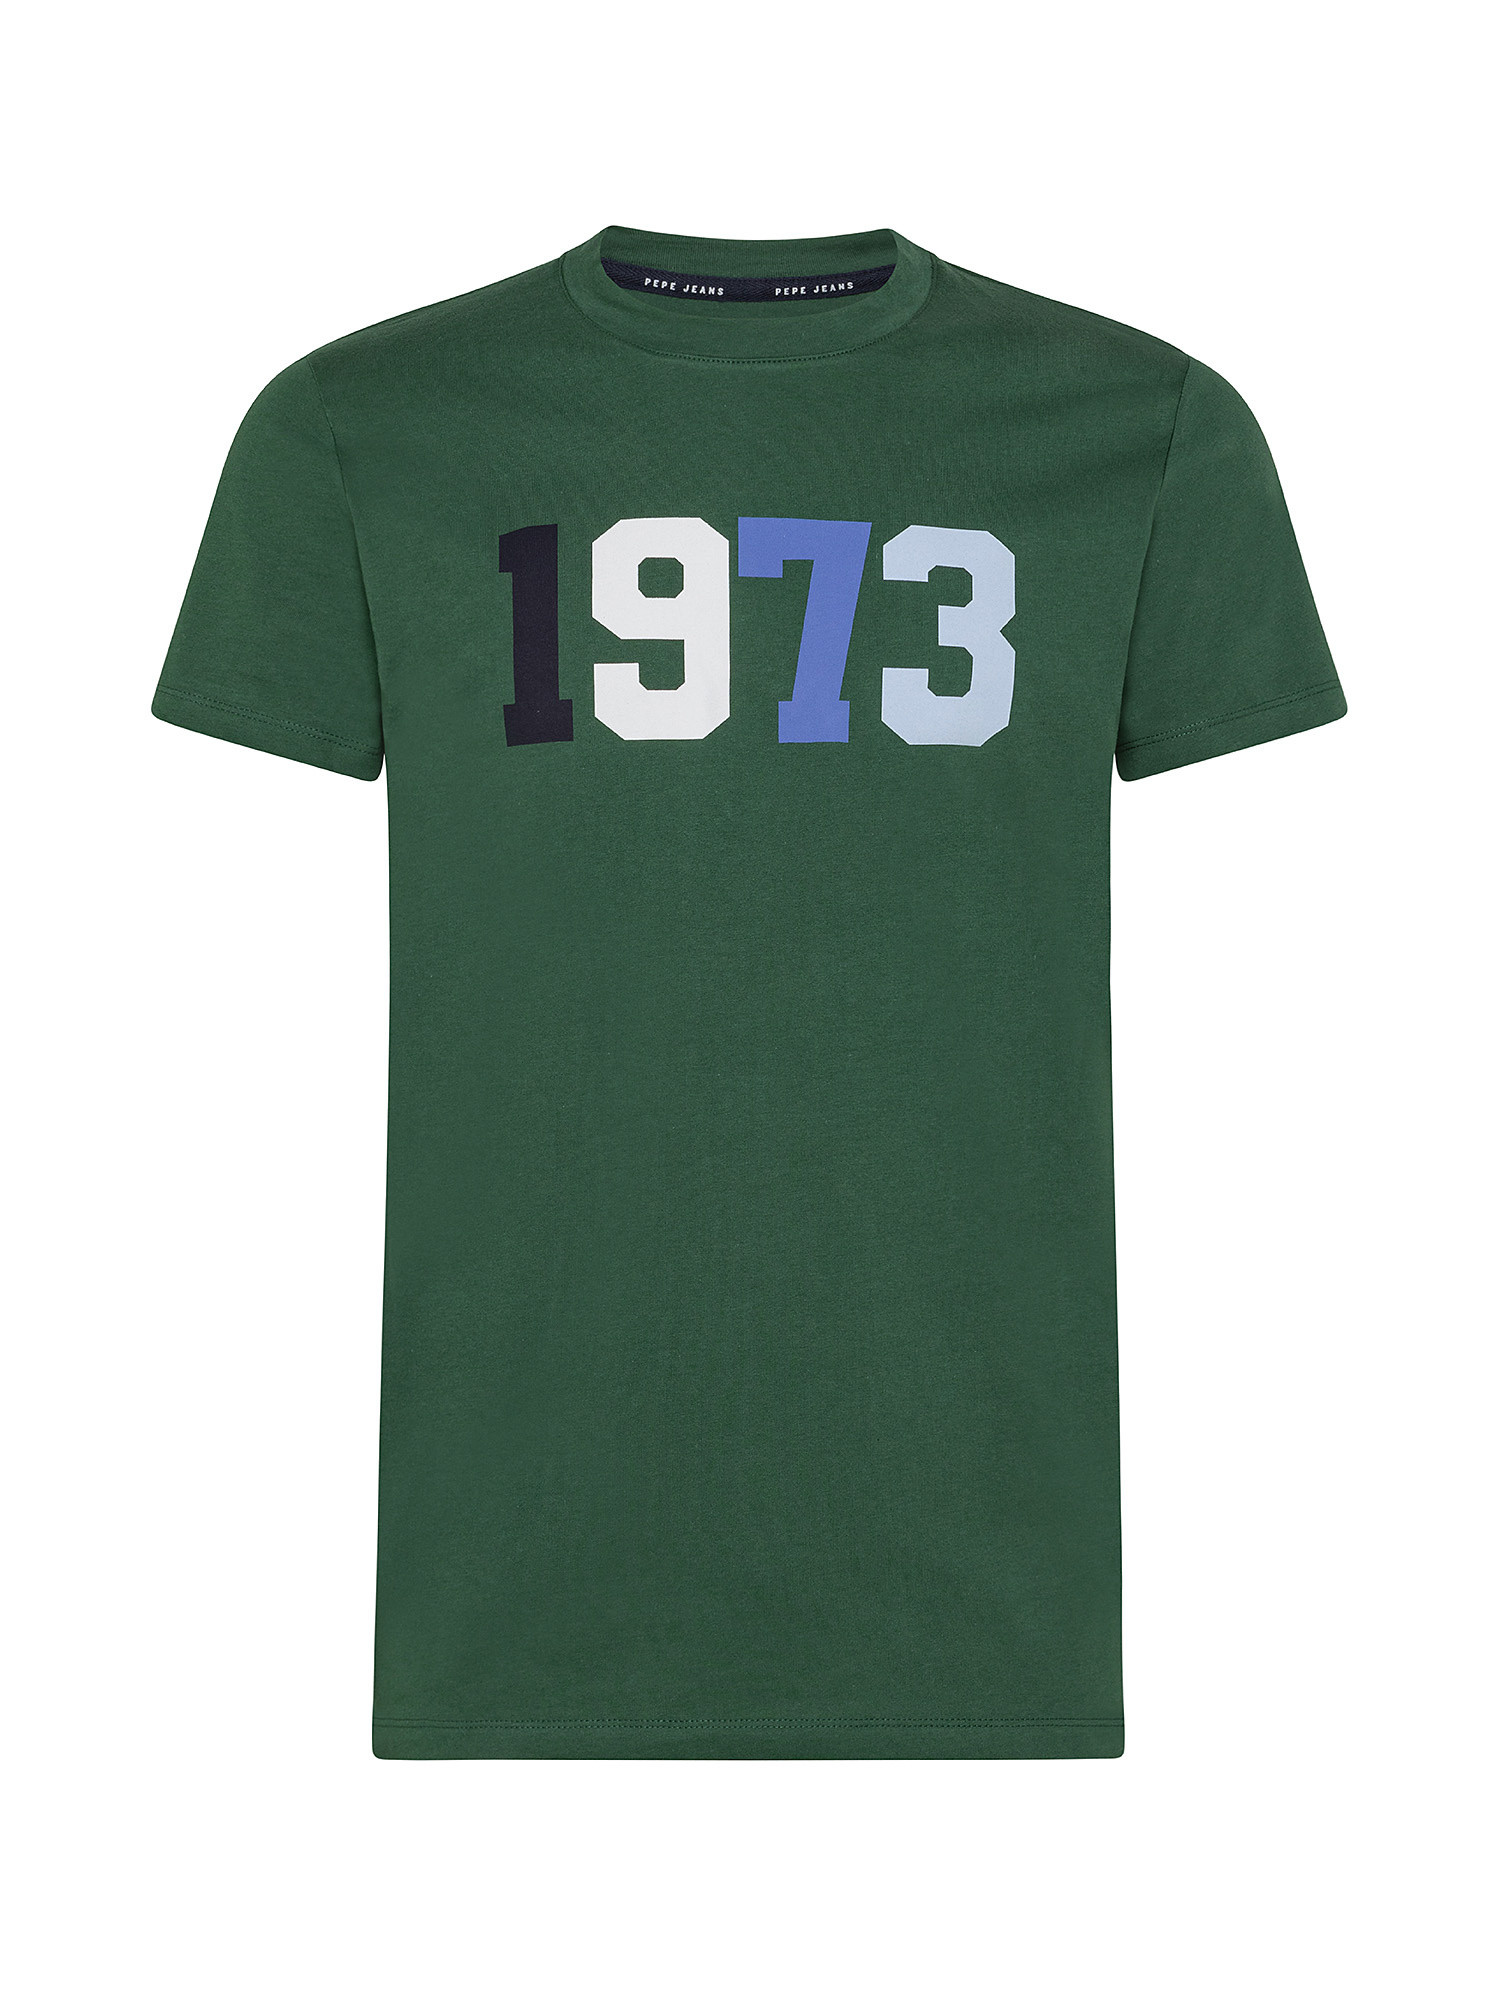 Totem cotton T-shirt, Green, large image number 0